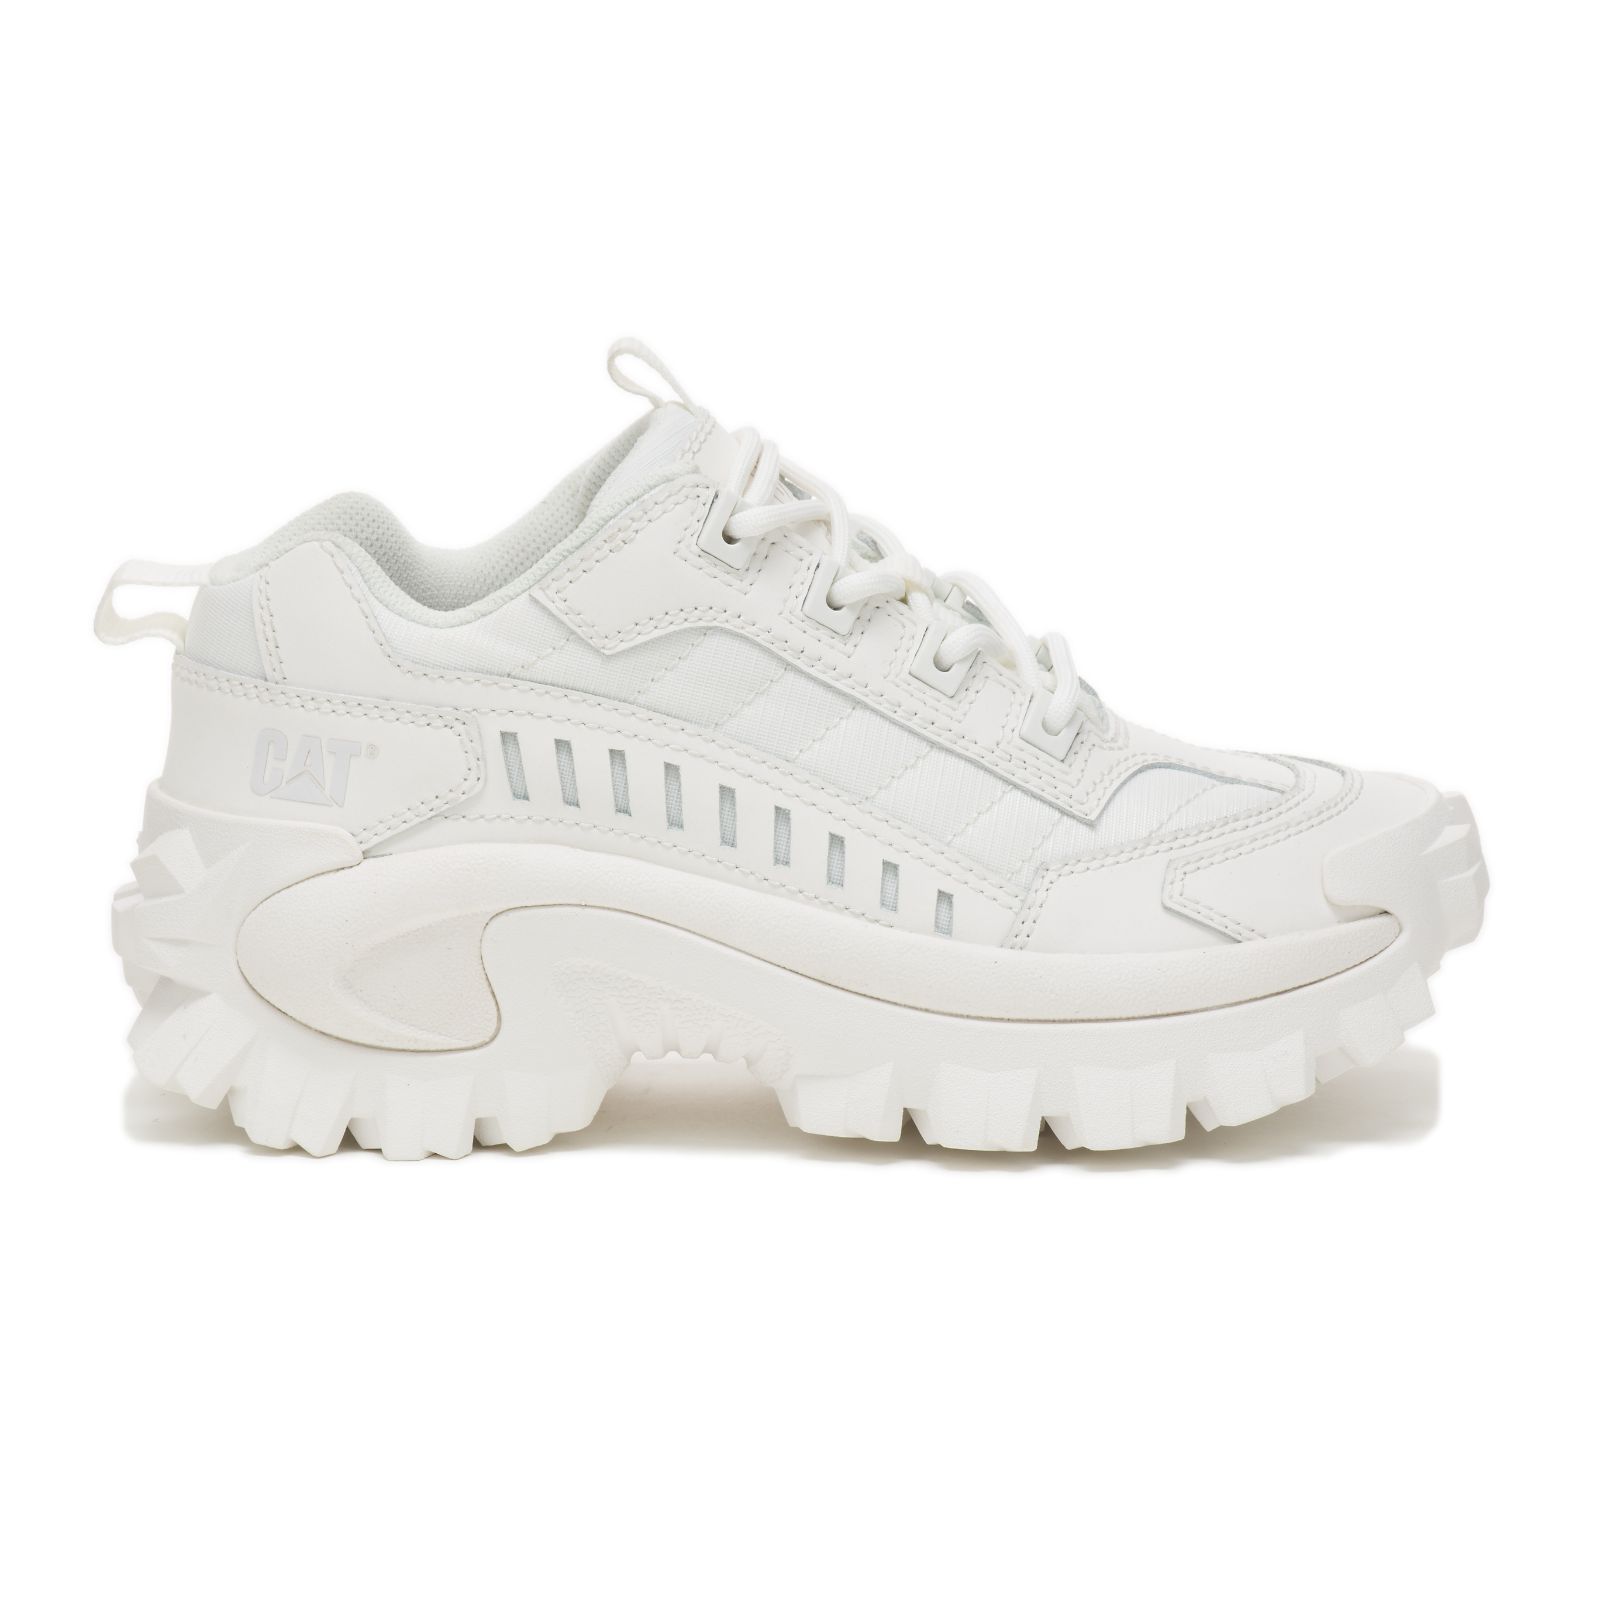 Caterpillar Shoes Online - Caterpillar Intruder Mens Sneakers White (792315-EOQ)